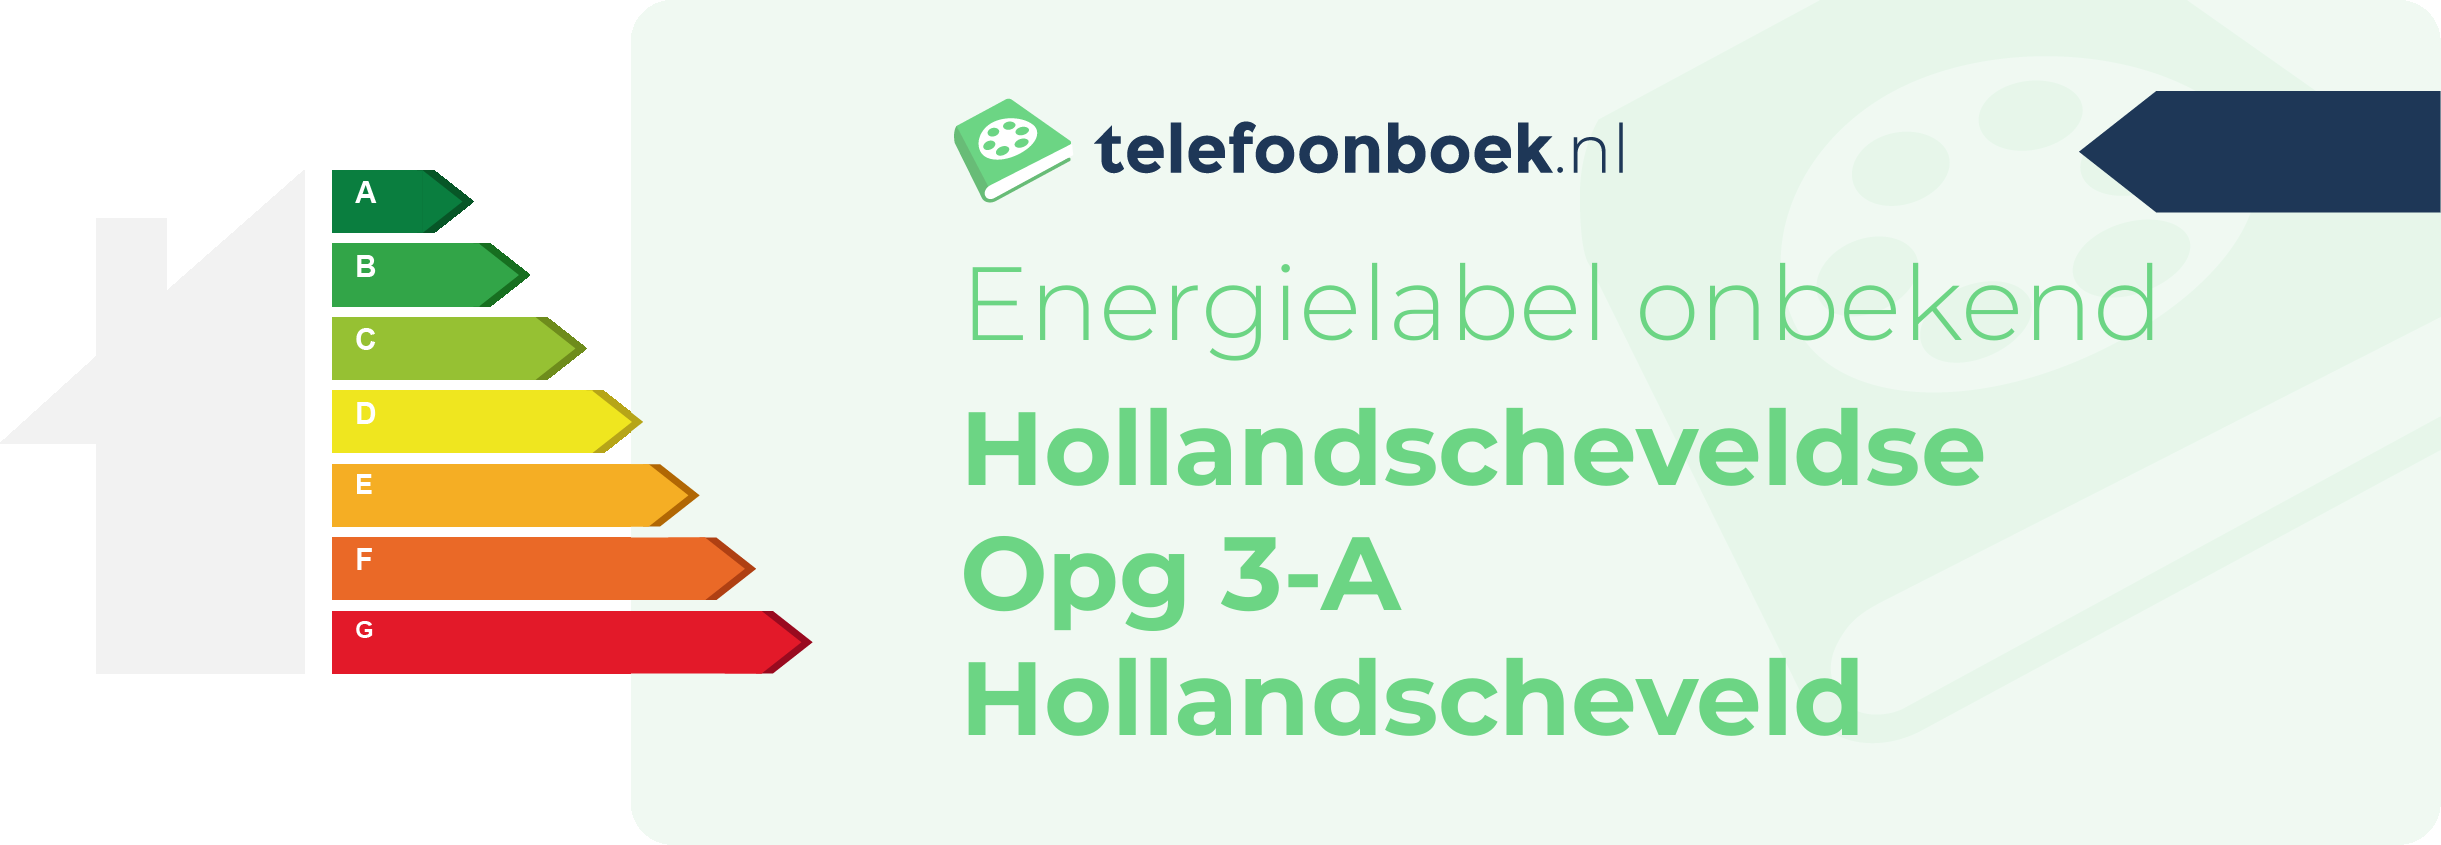 Energielabel Hollandscheveldse Opg 3-A Hollandscheveld